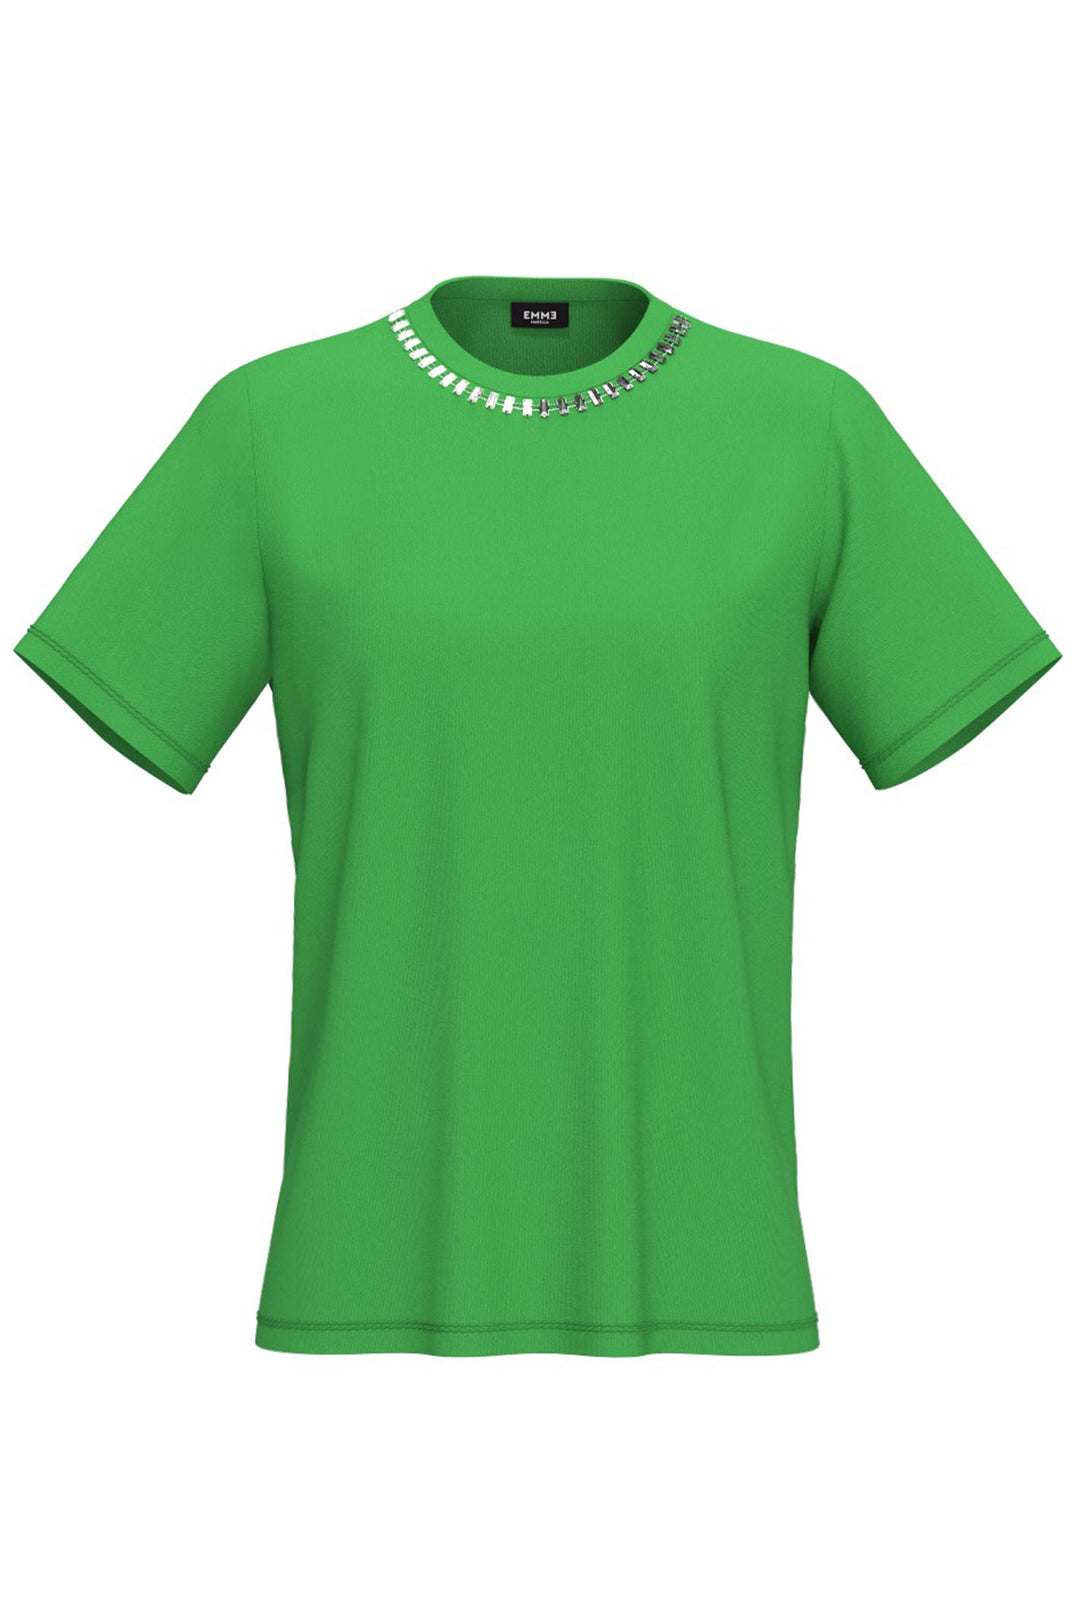 Emme Ordine 2415971052200 Green T-Shirt - Olivia Grace Fashion